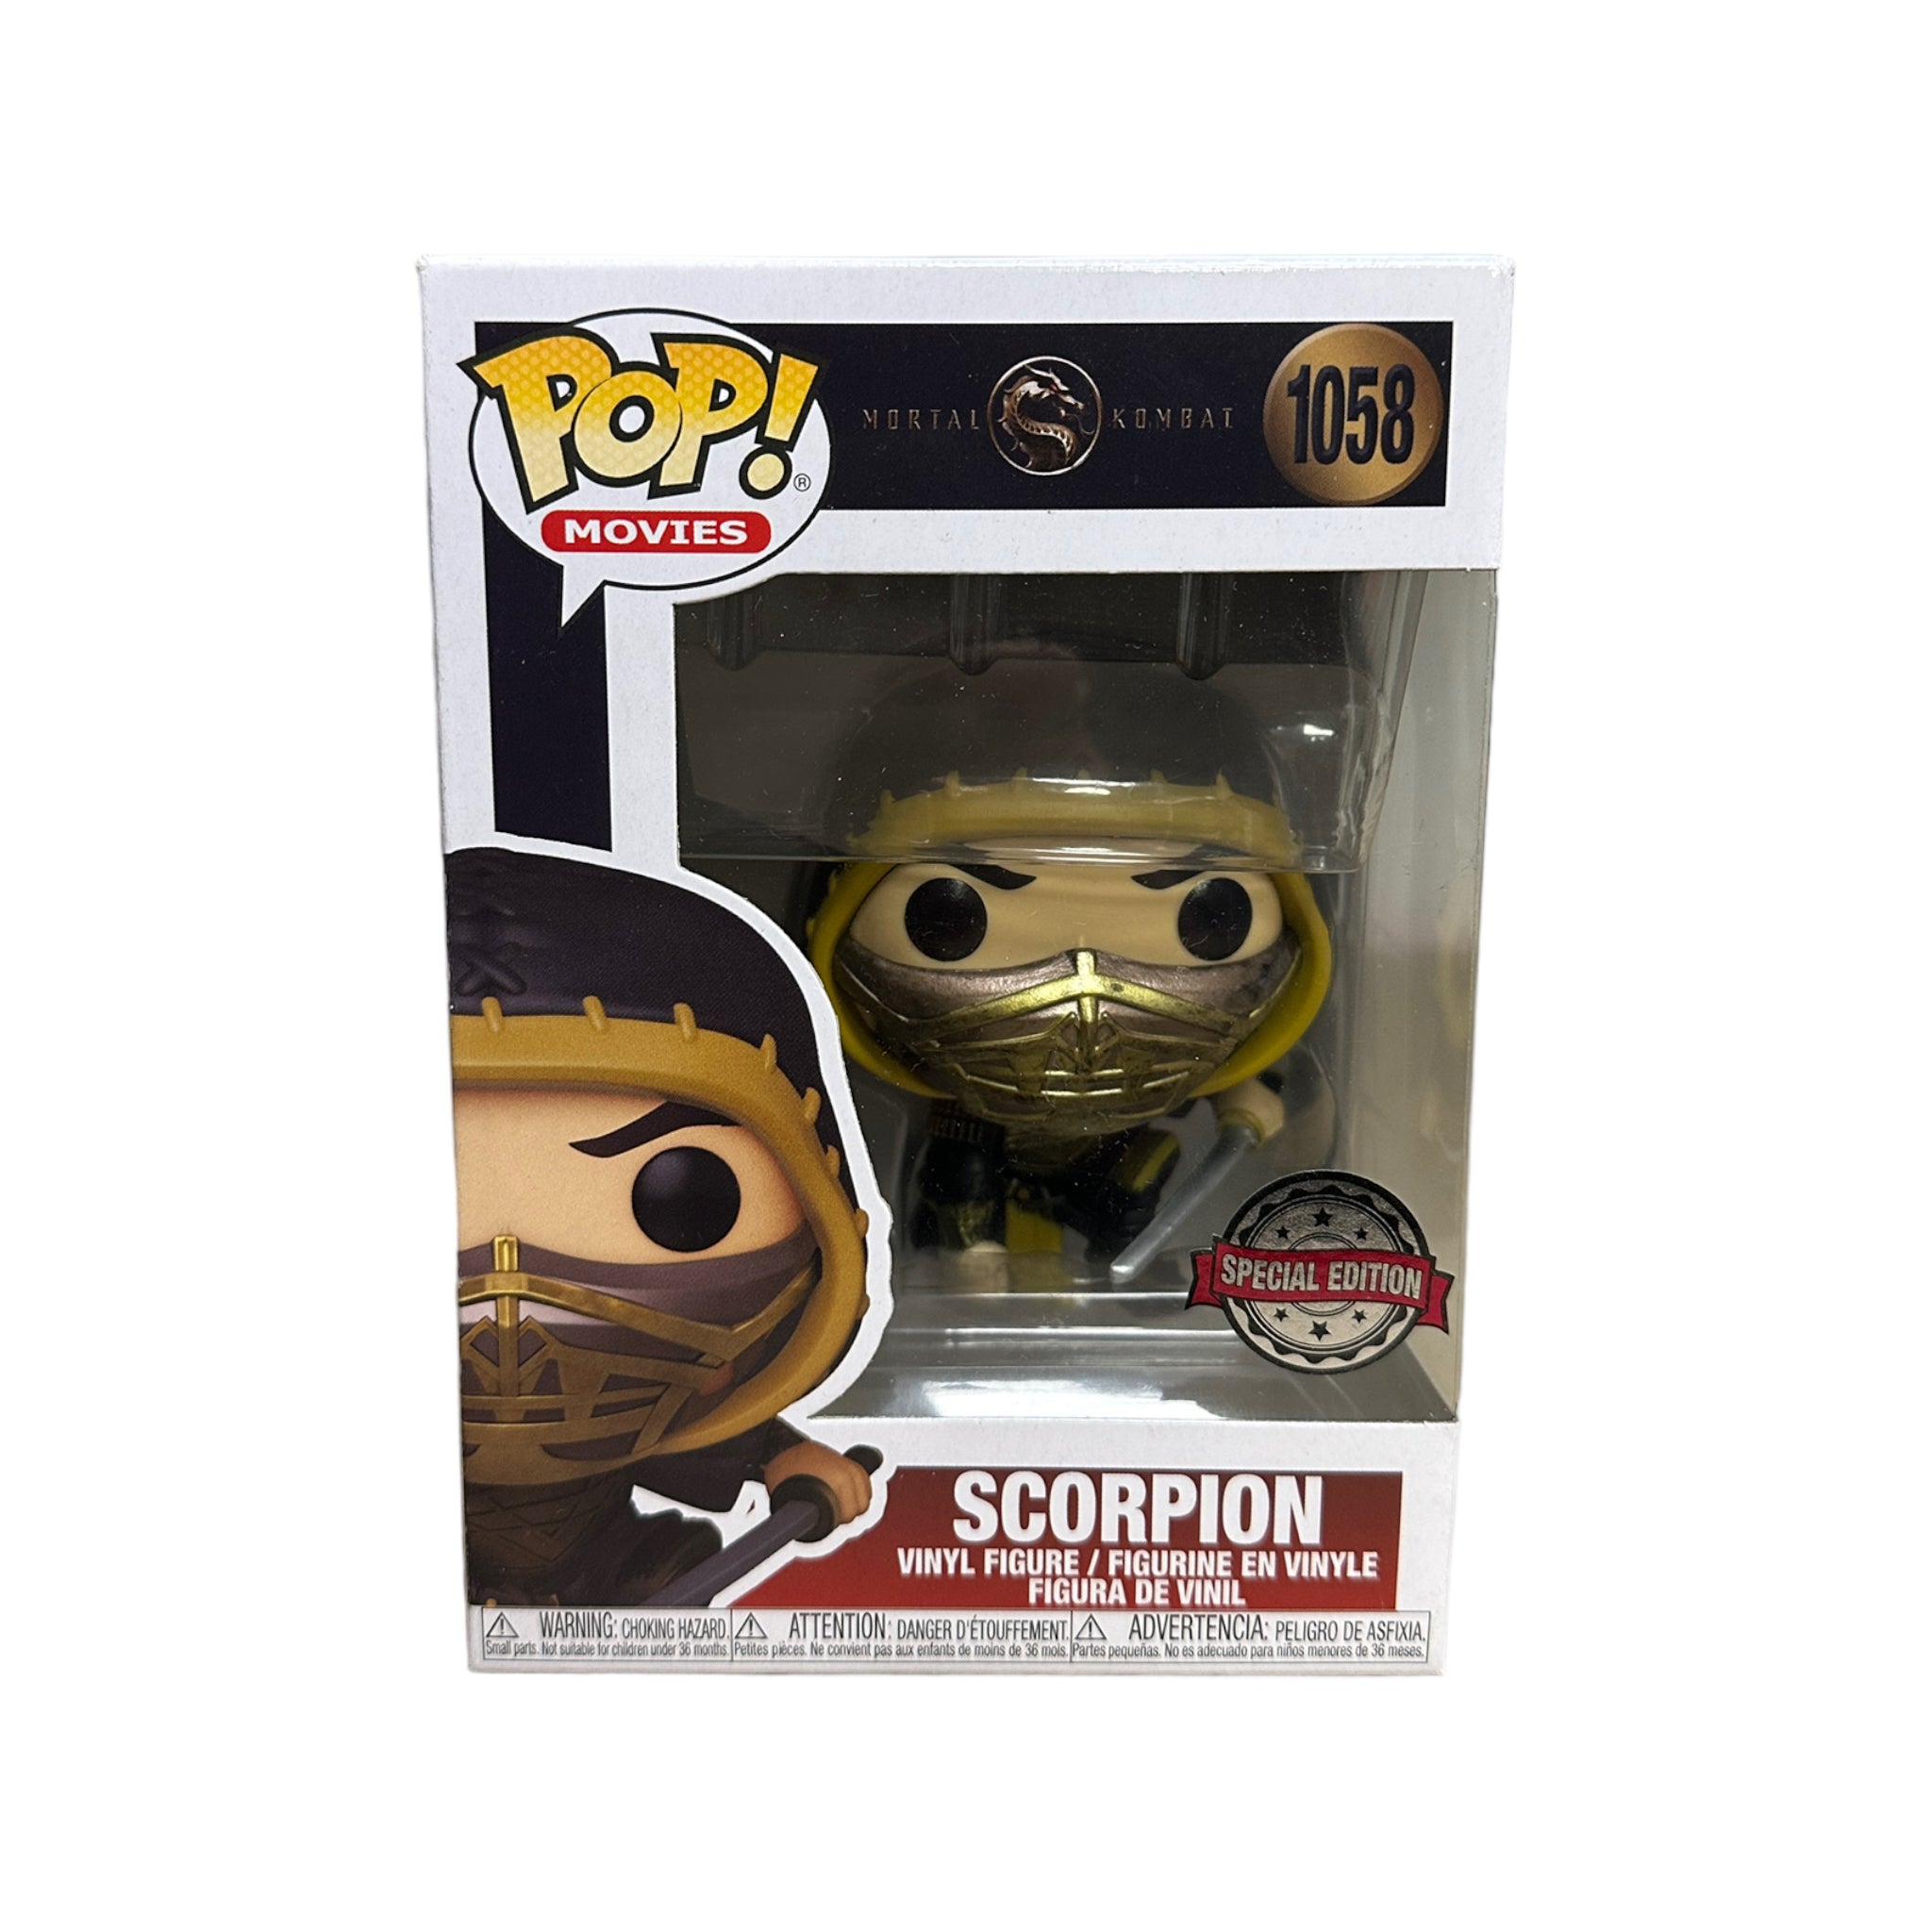 Scorpion #1058 Funko Pop! - Mortal Kombat - Special Edition - Condition 8.75/10